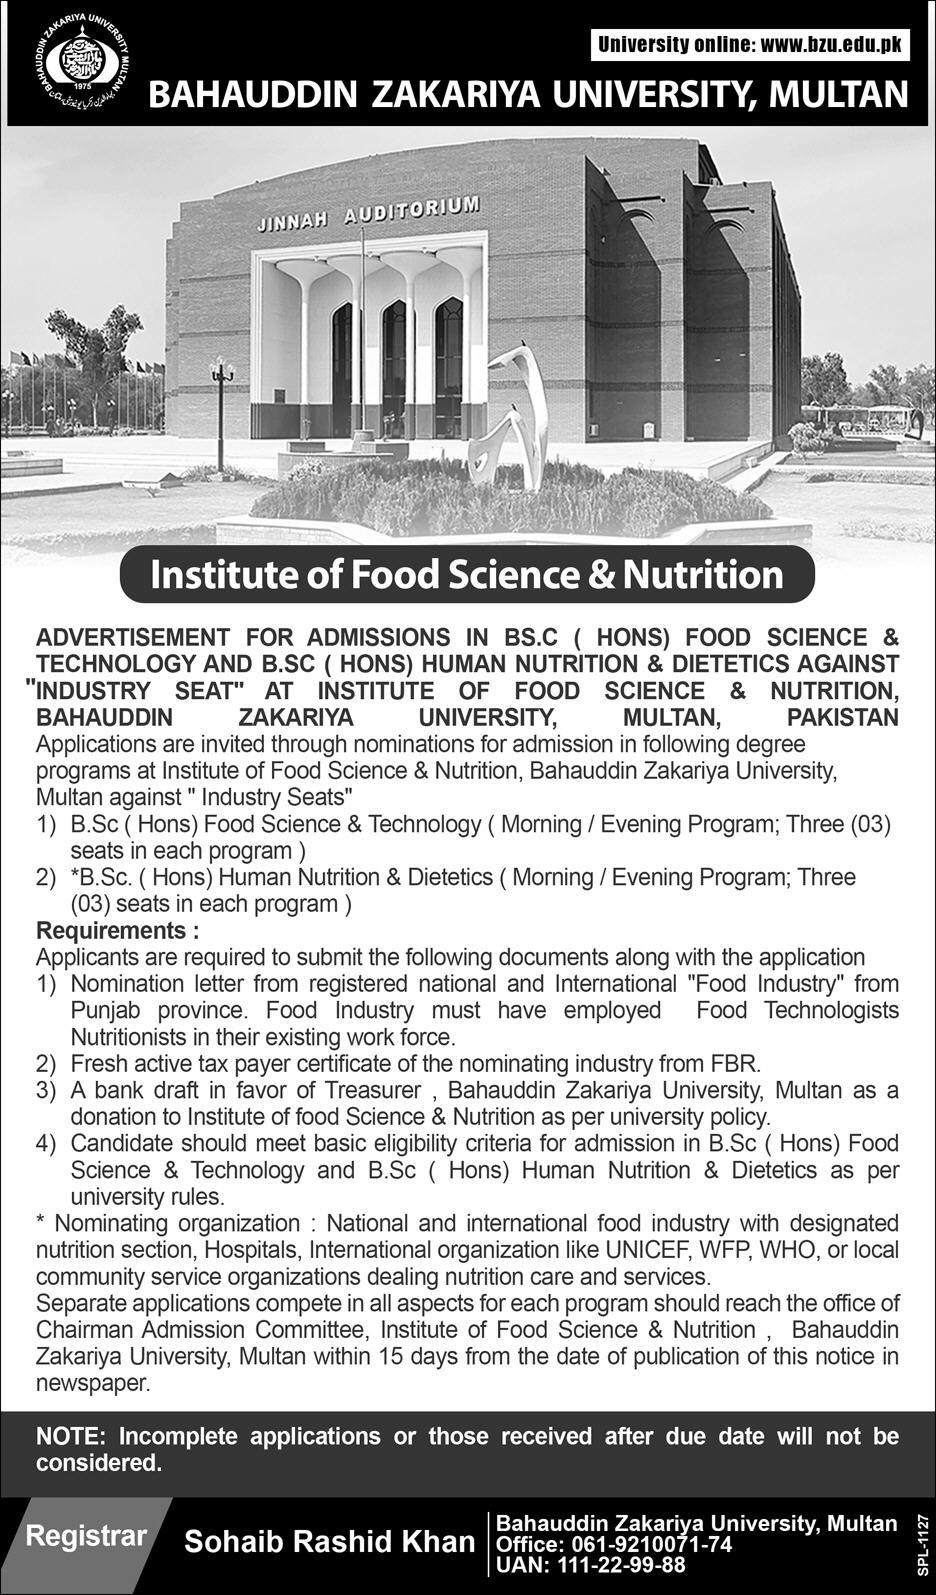 BZU Multan Institute of Food Science & Nutrition Admission